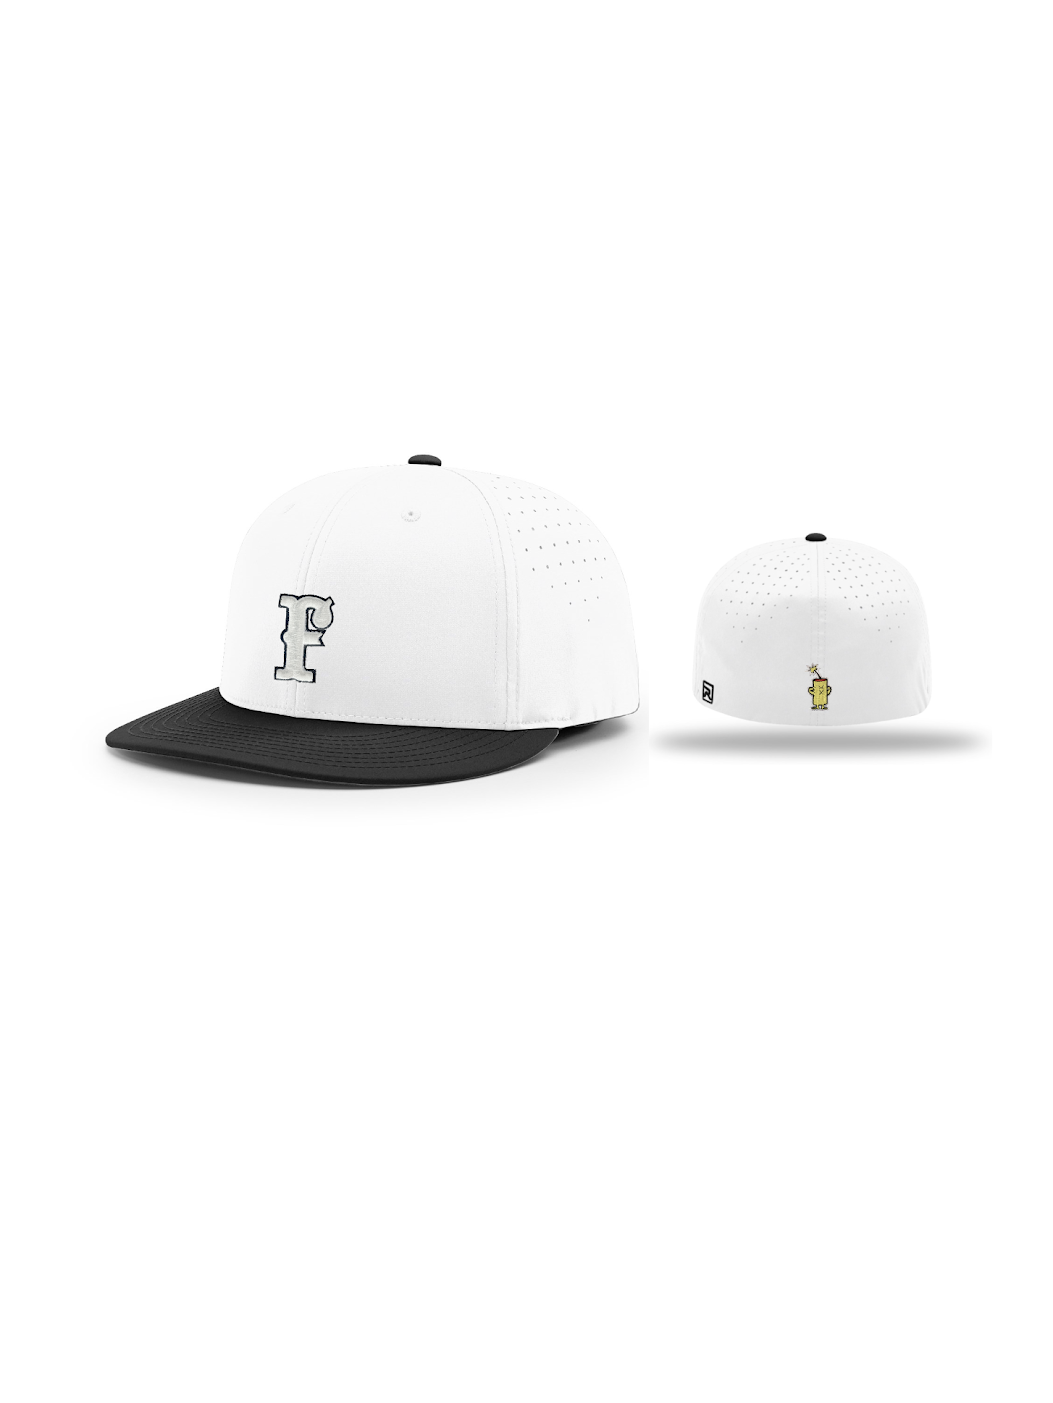 FC R-FLEX Hat (White/Black) - Firecracker Softball Gear